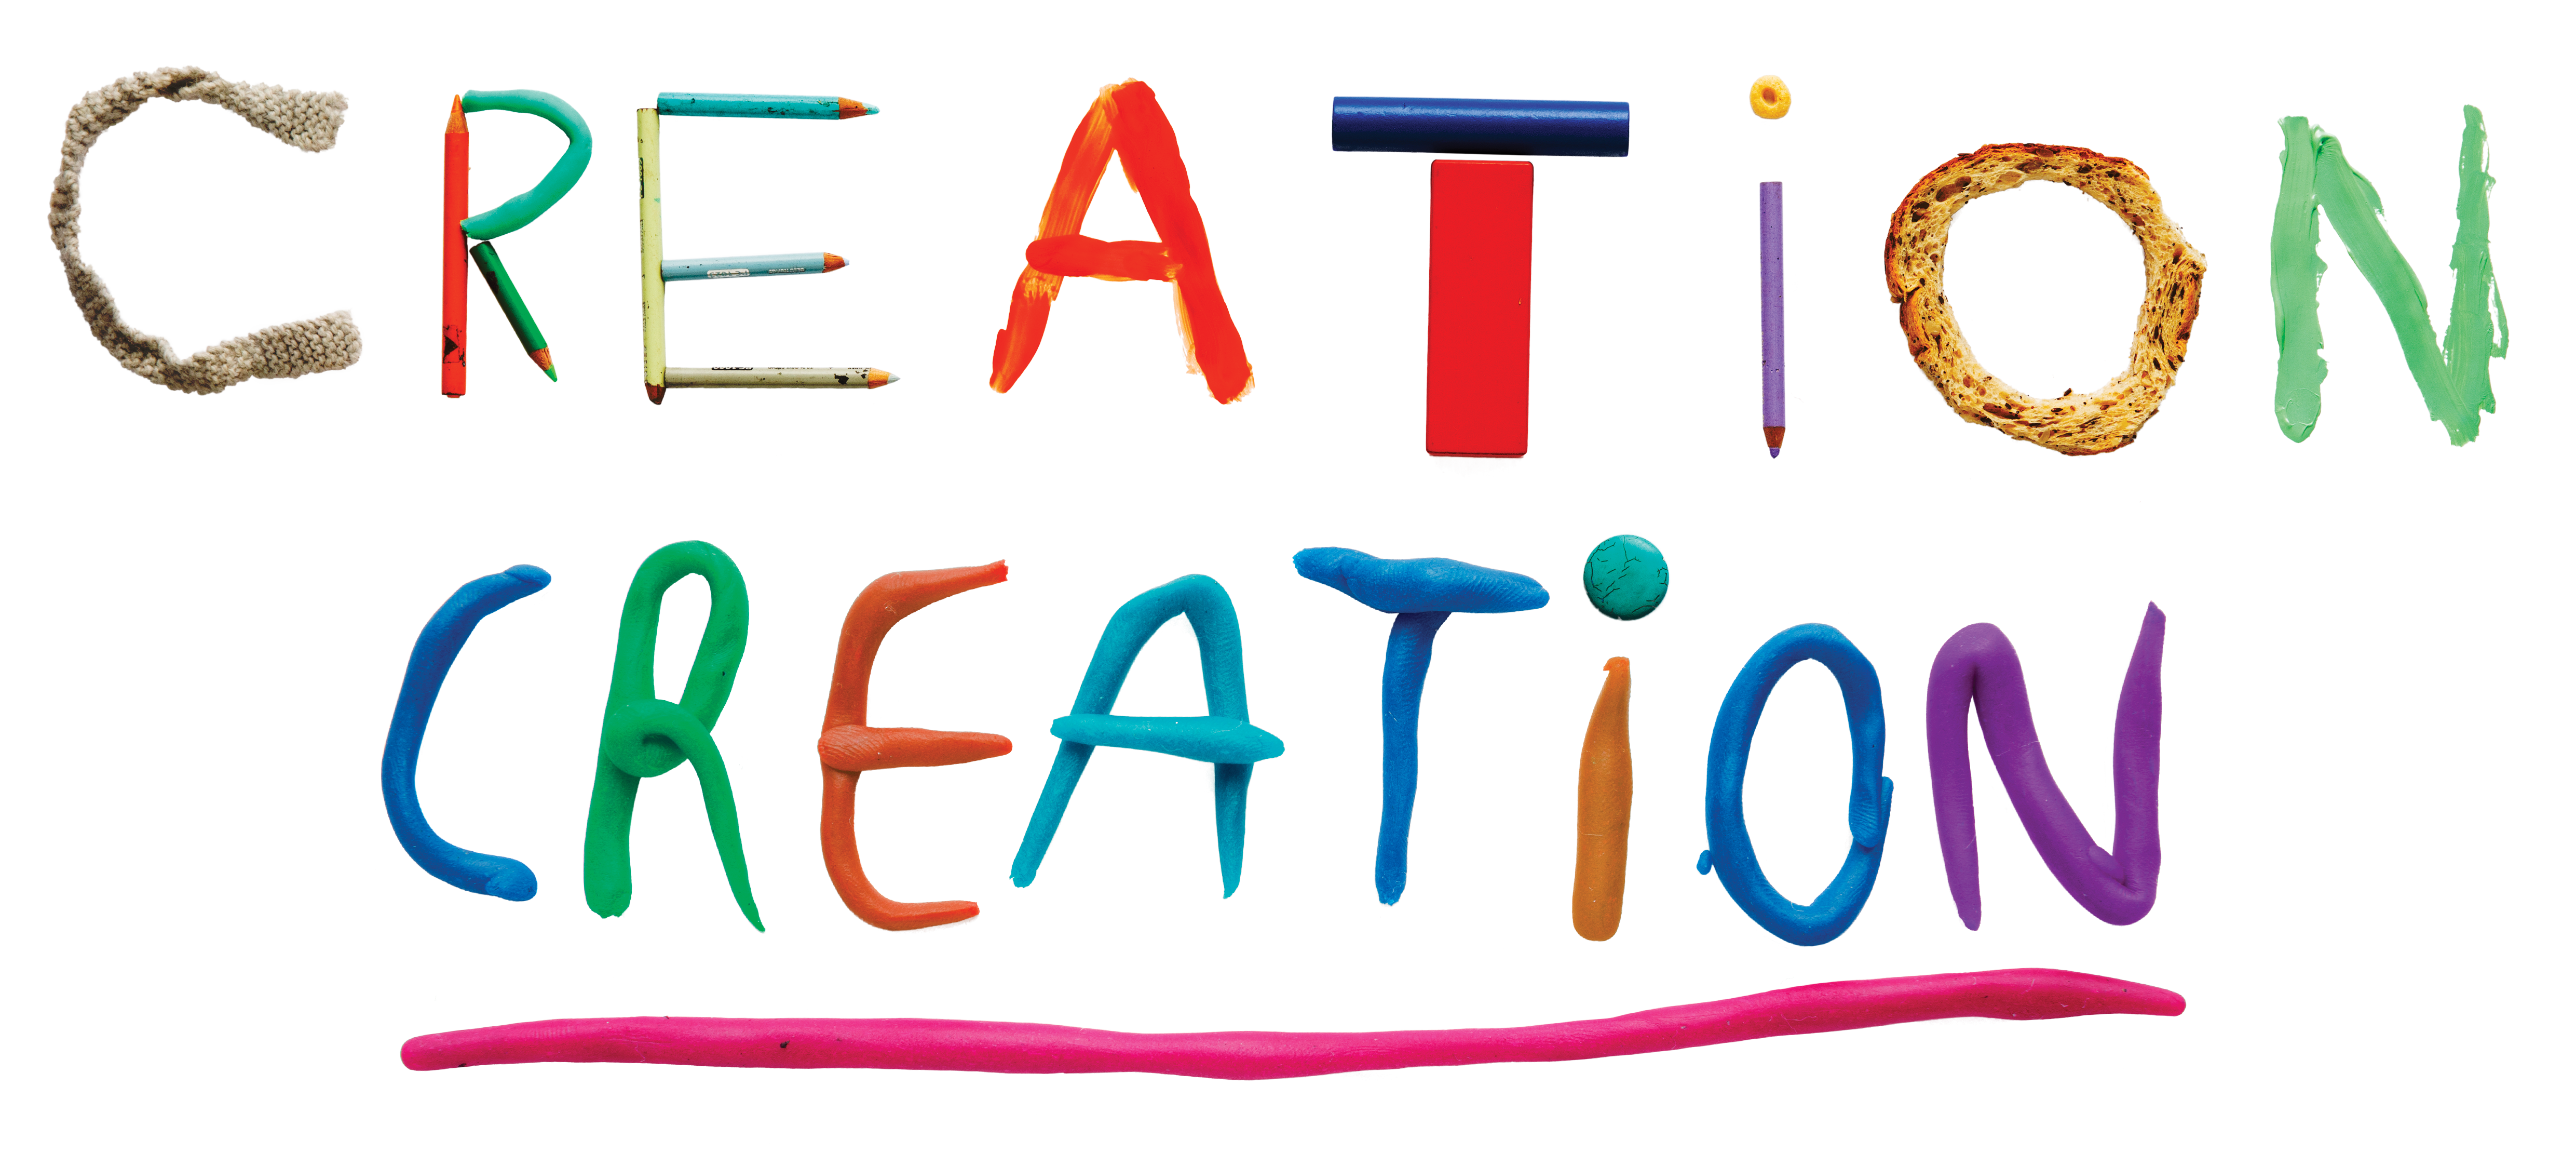 Creation creation